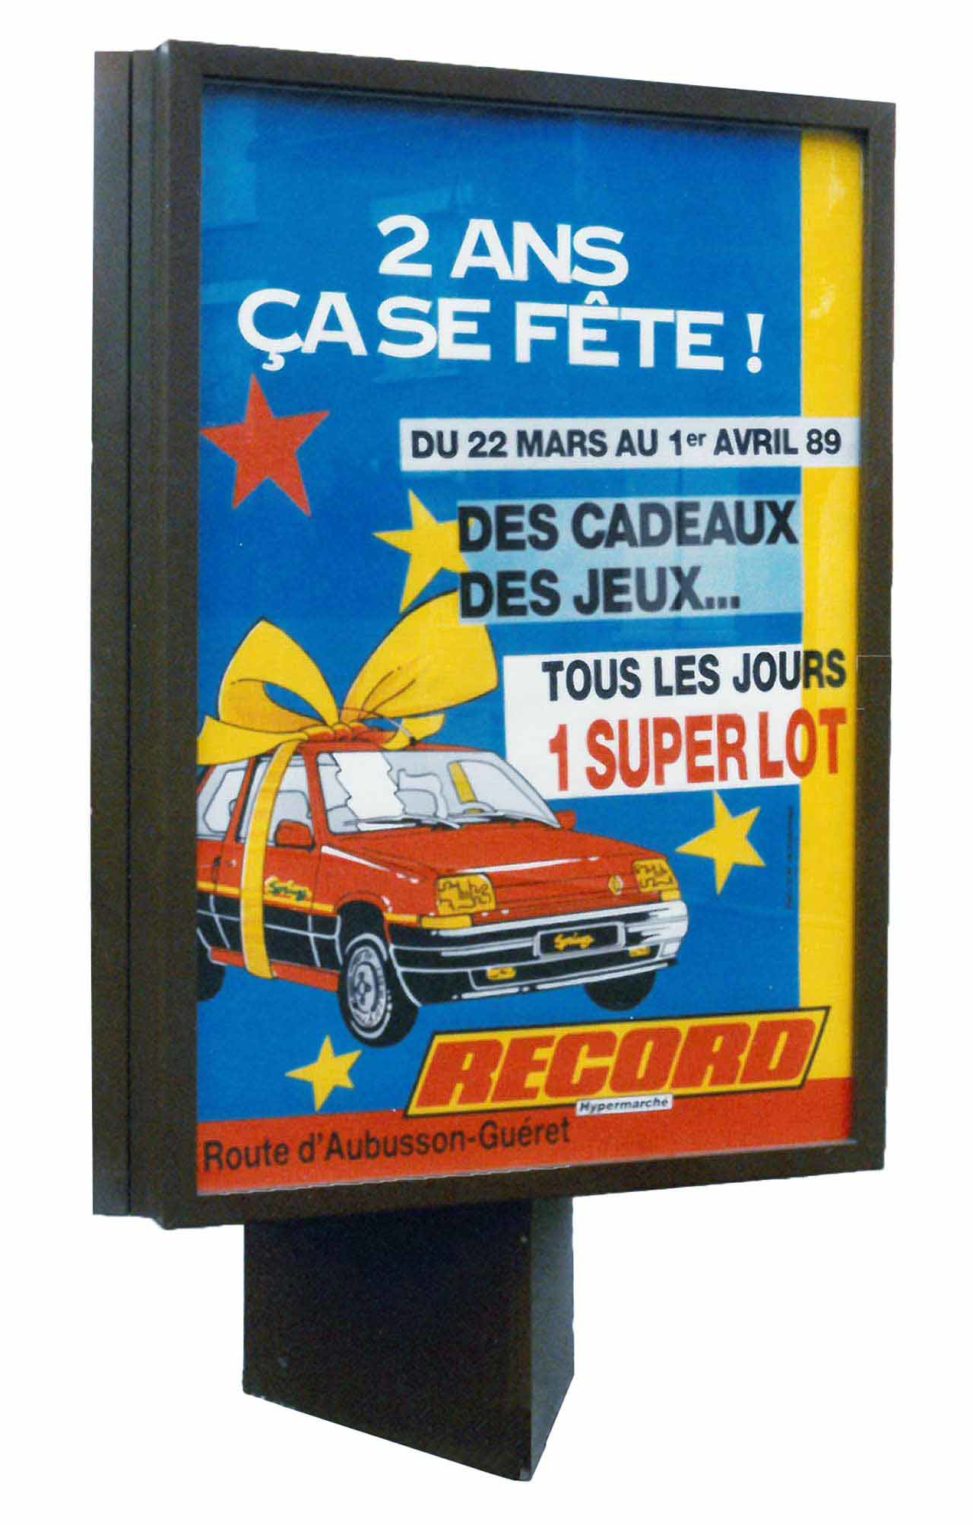 1989-Affiche Sucette-Supermarchés-Record-Agence-Scandere